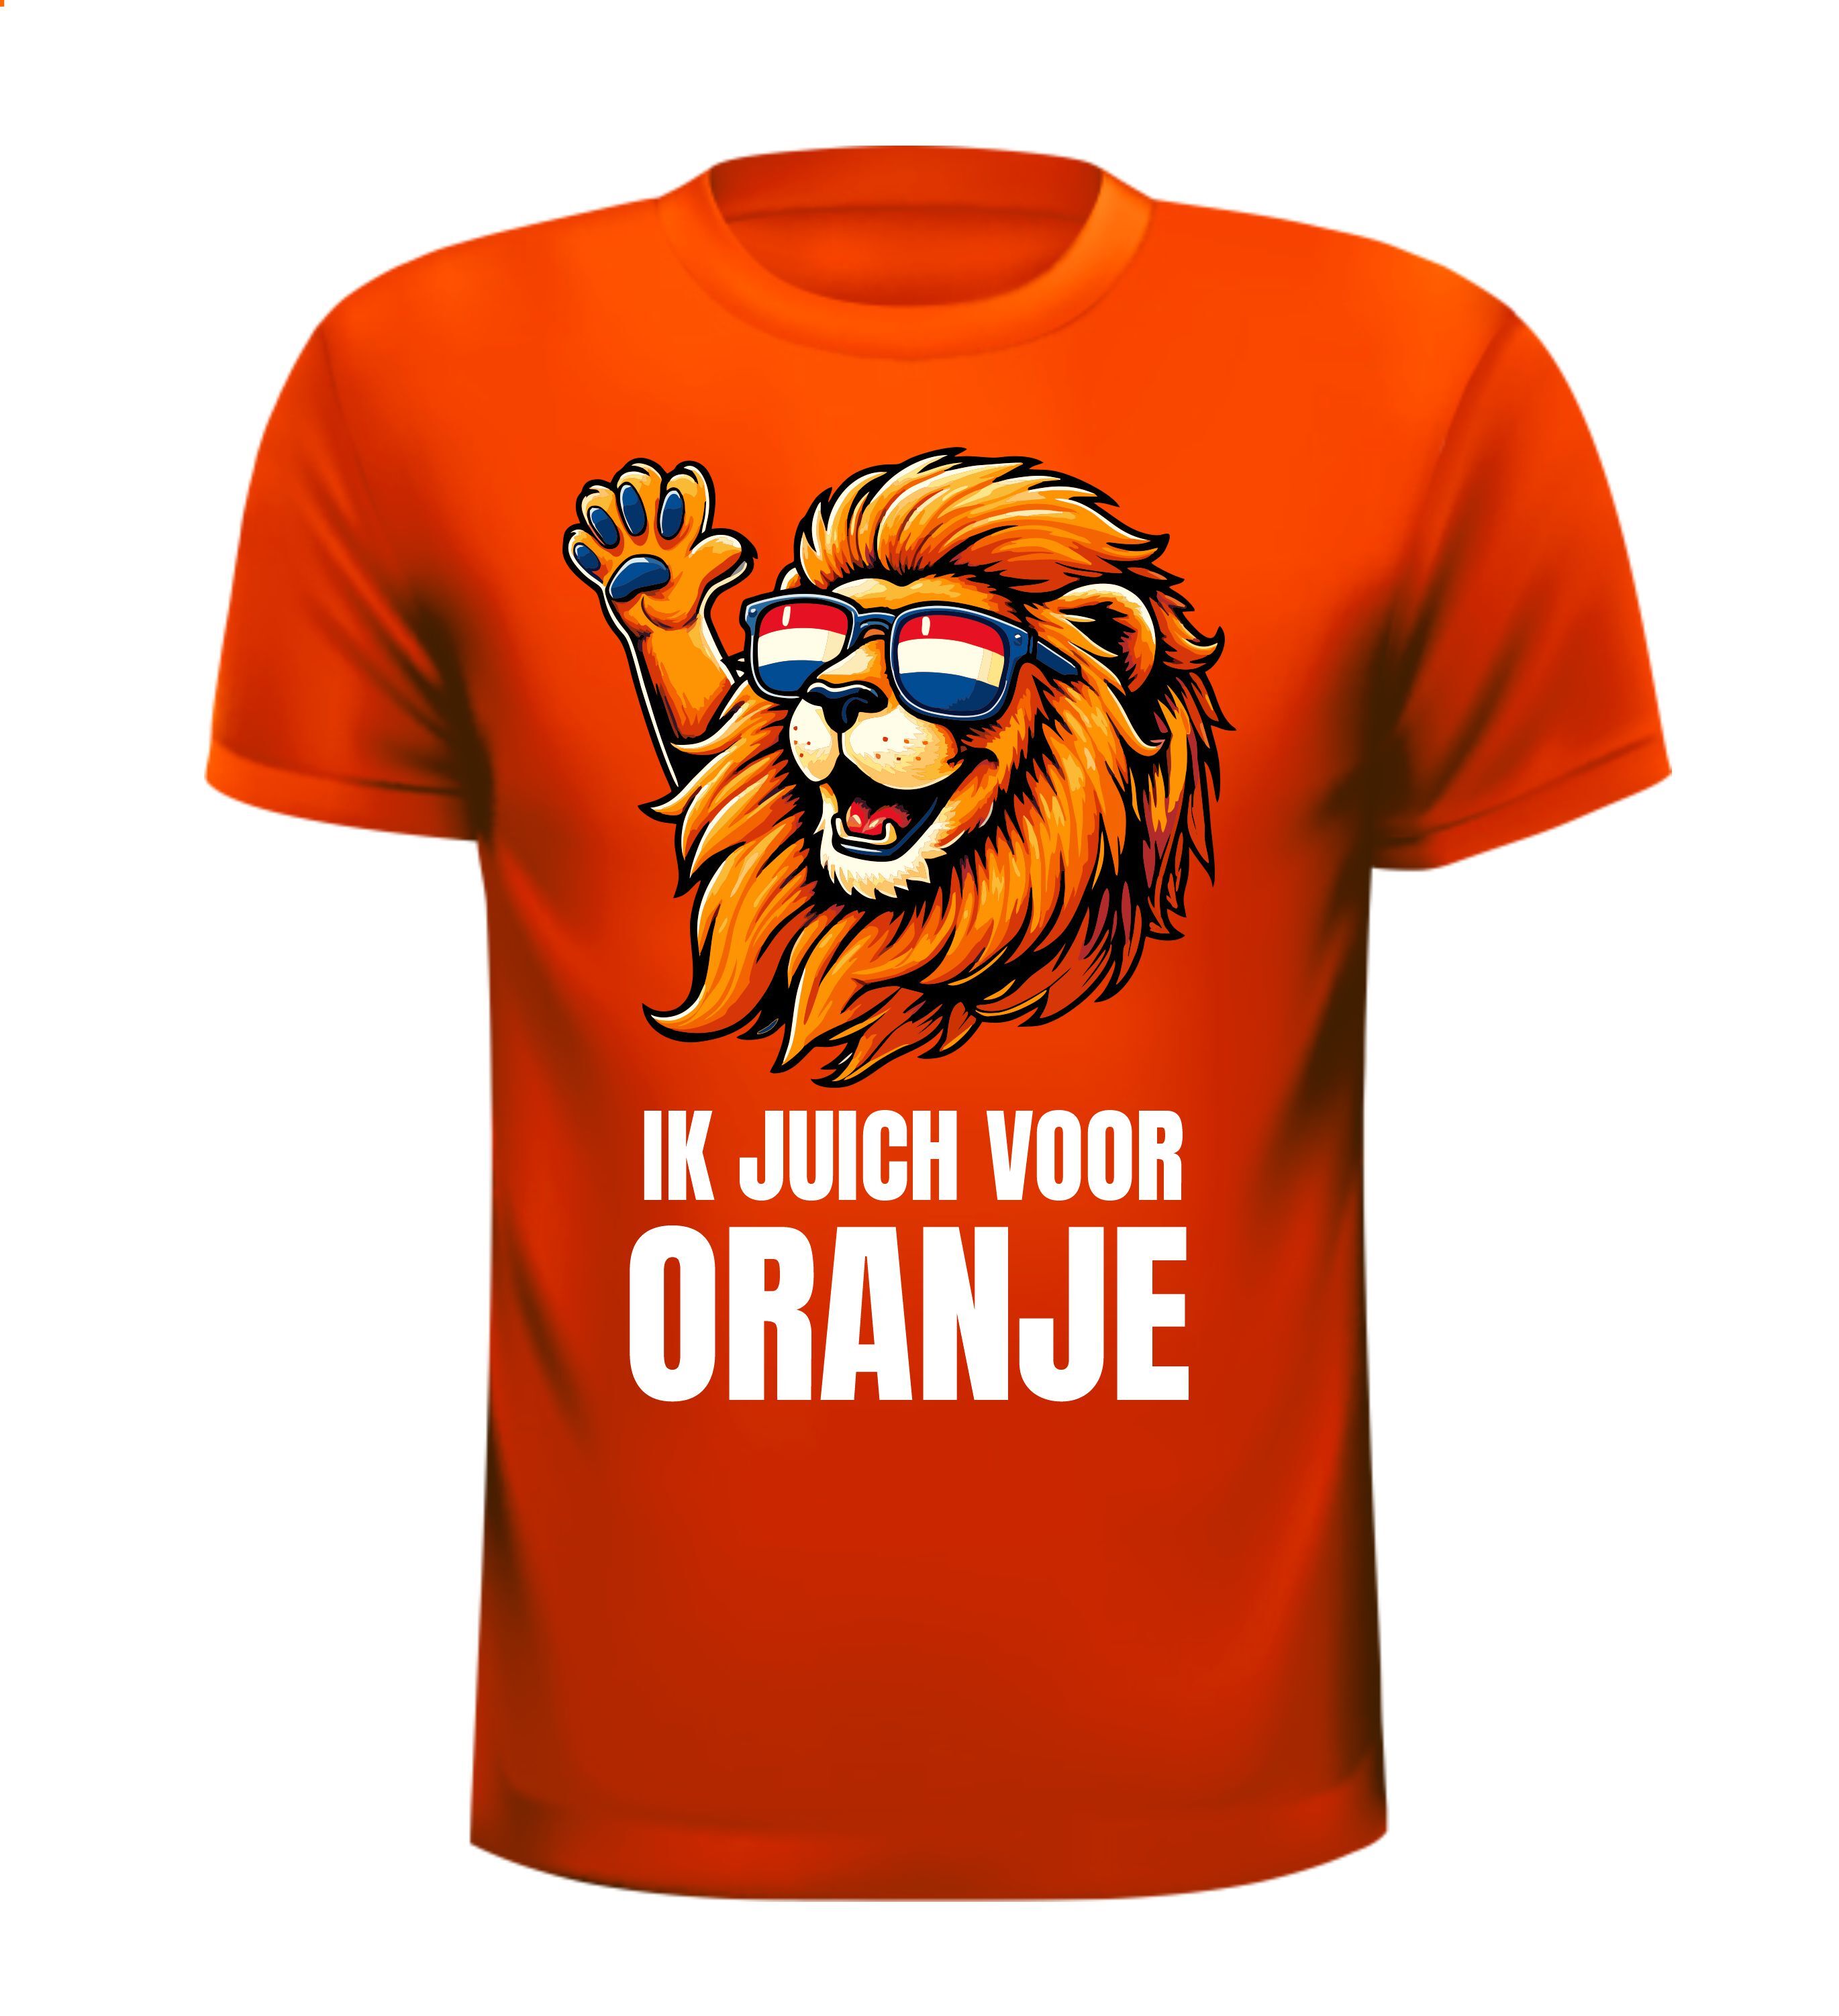 Oranje EK shirtje ik juich voor oranje! Voetbal shirtje